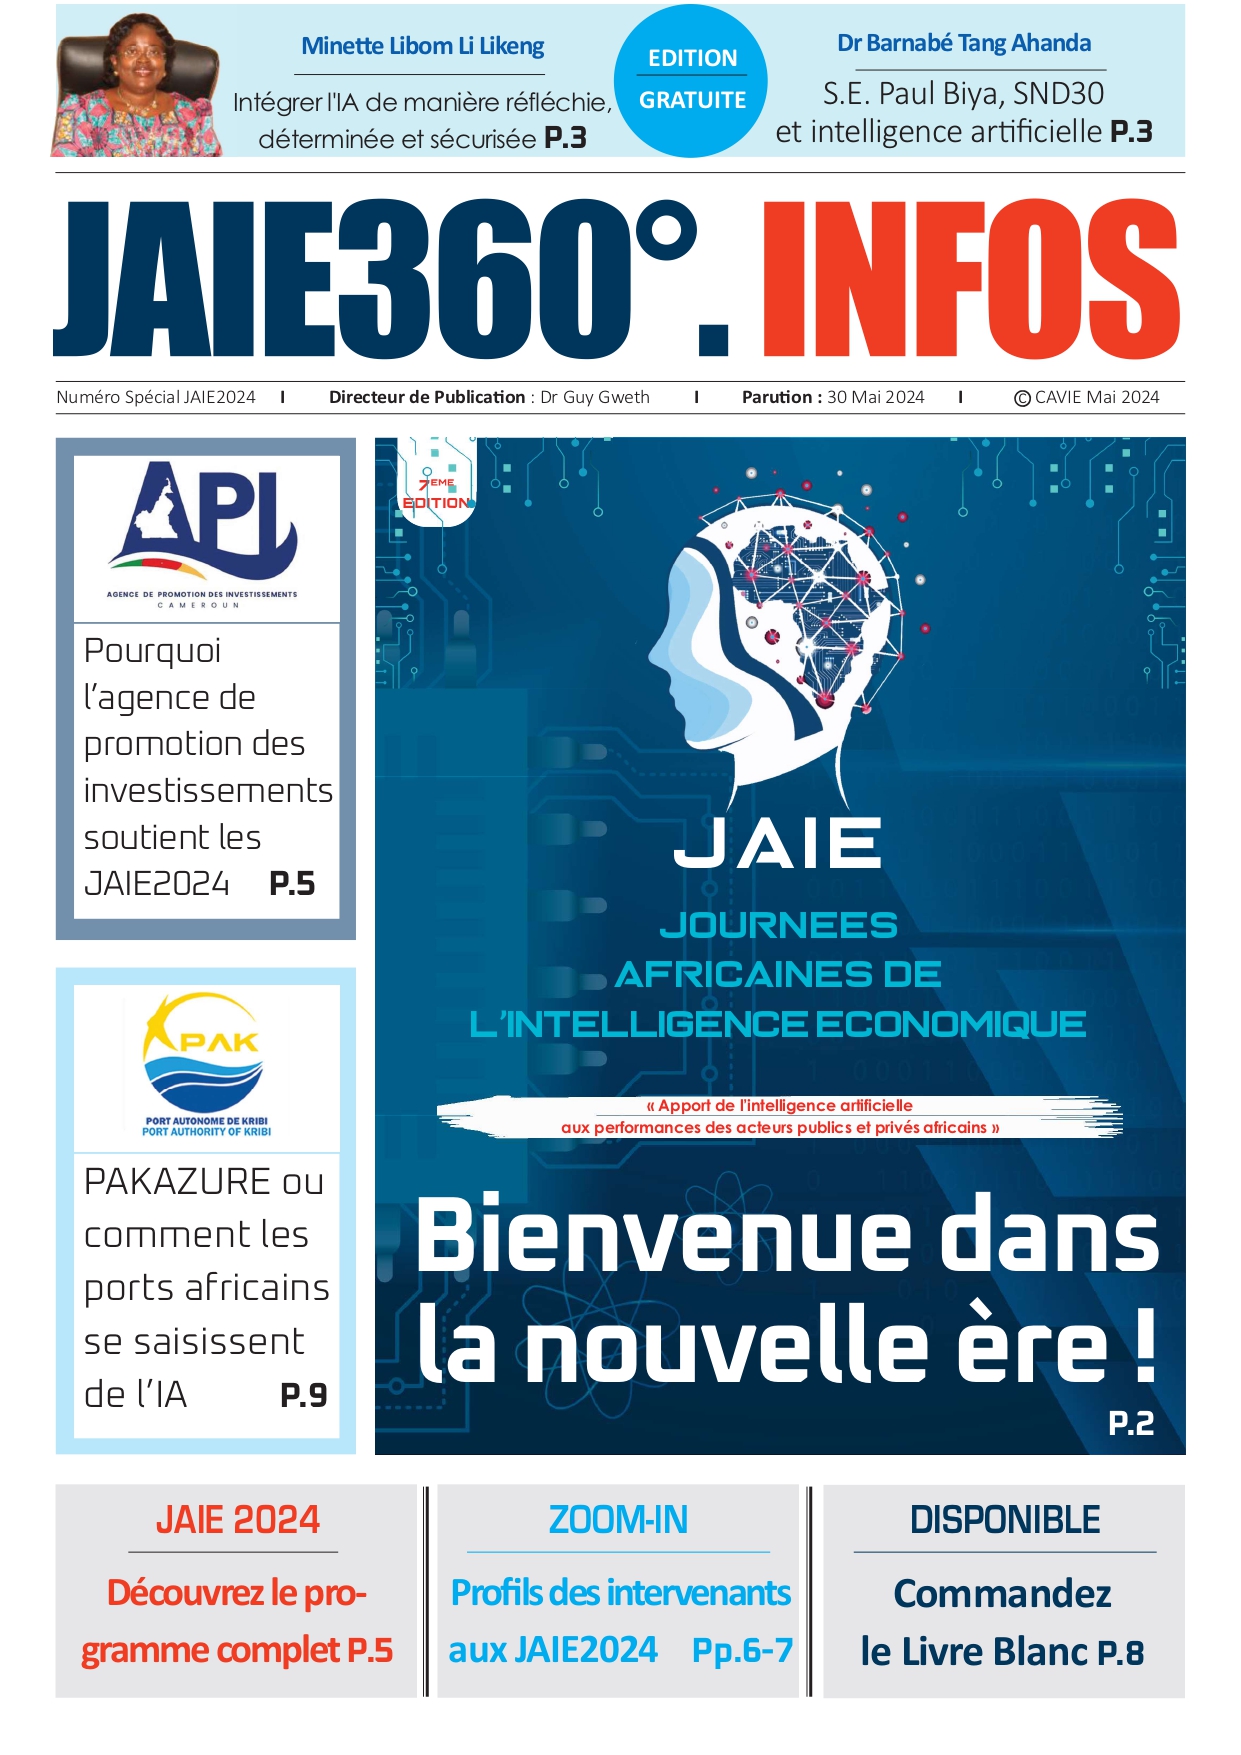 You are currently viewing JAIE 360 dégrés INFOS Intelligence Economique